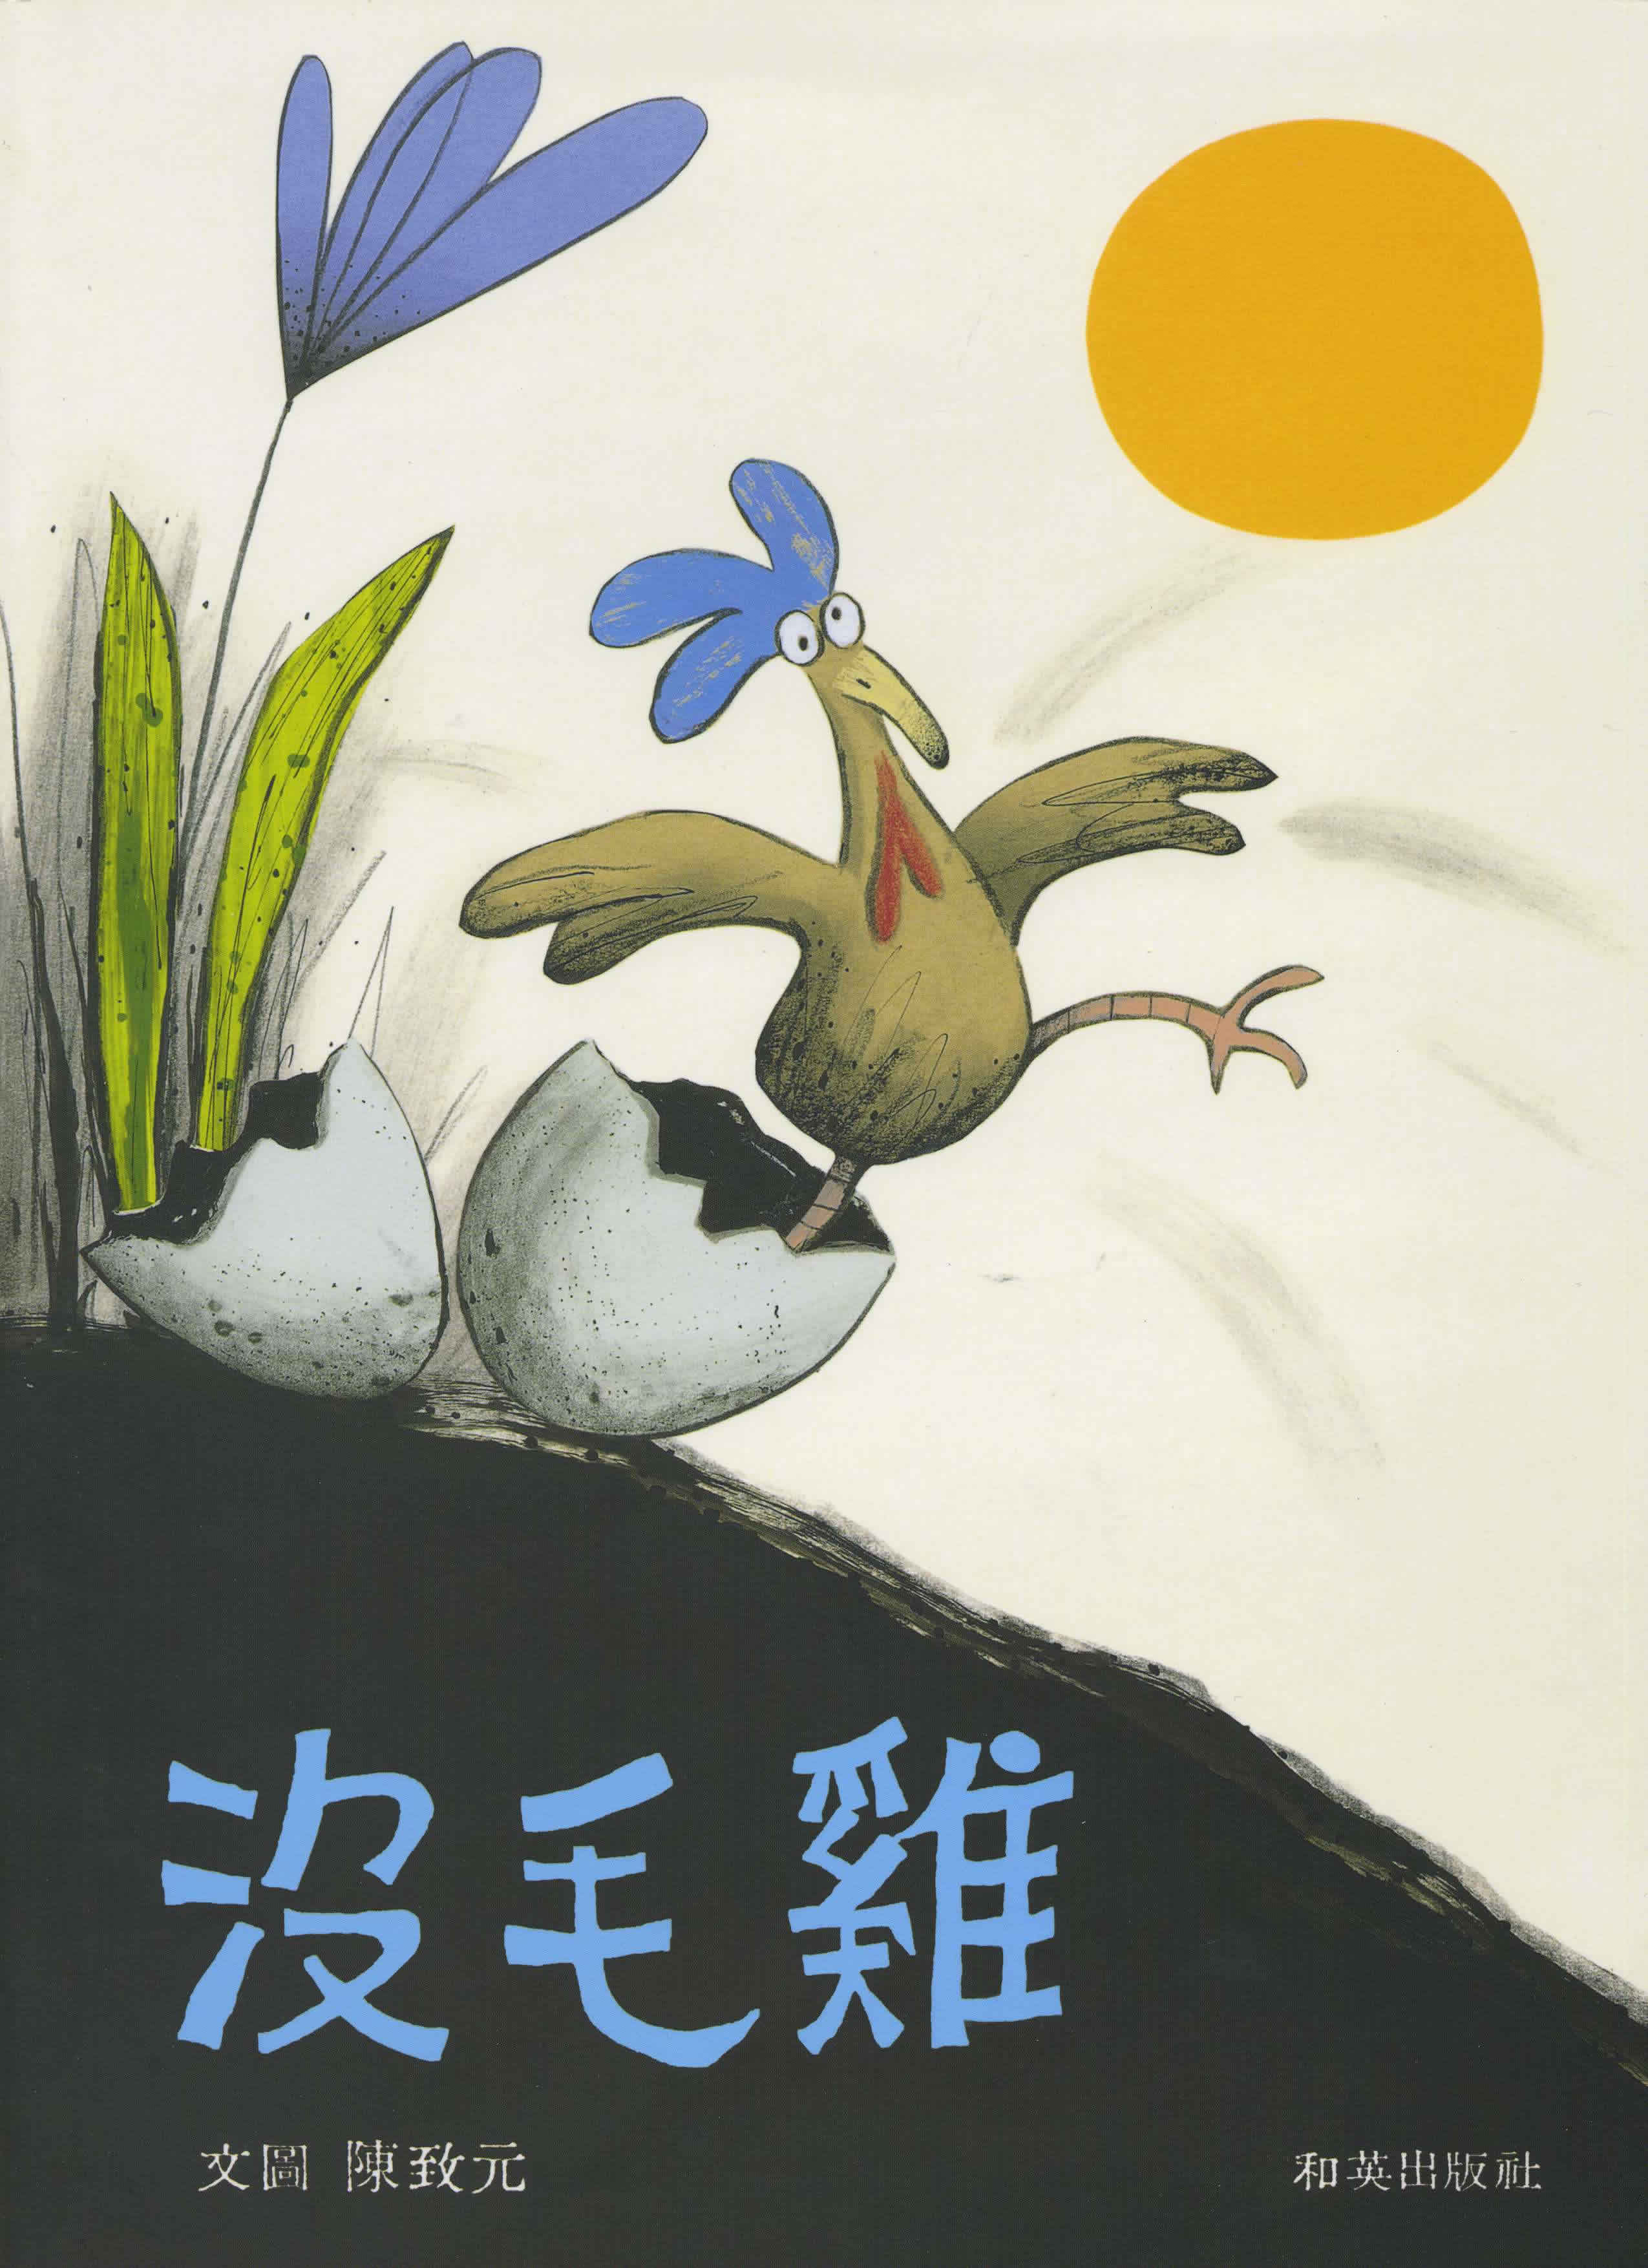 Chen Zhiyuan: Mei mao ji (The Featherless Chicken) (zweisprachig Chinesisch-Englisch) (+ CD)<br>ISBN: 986-7942-24-8, 9867942248, 978-986-7942-24-1, 9789867942241